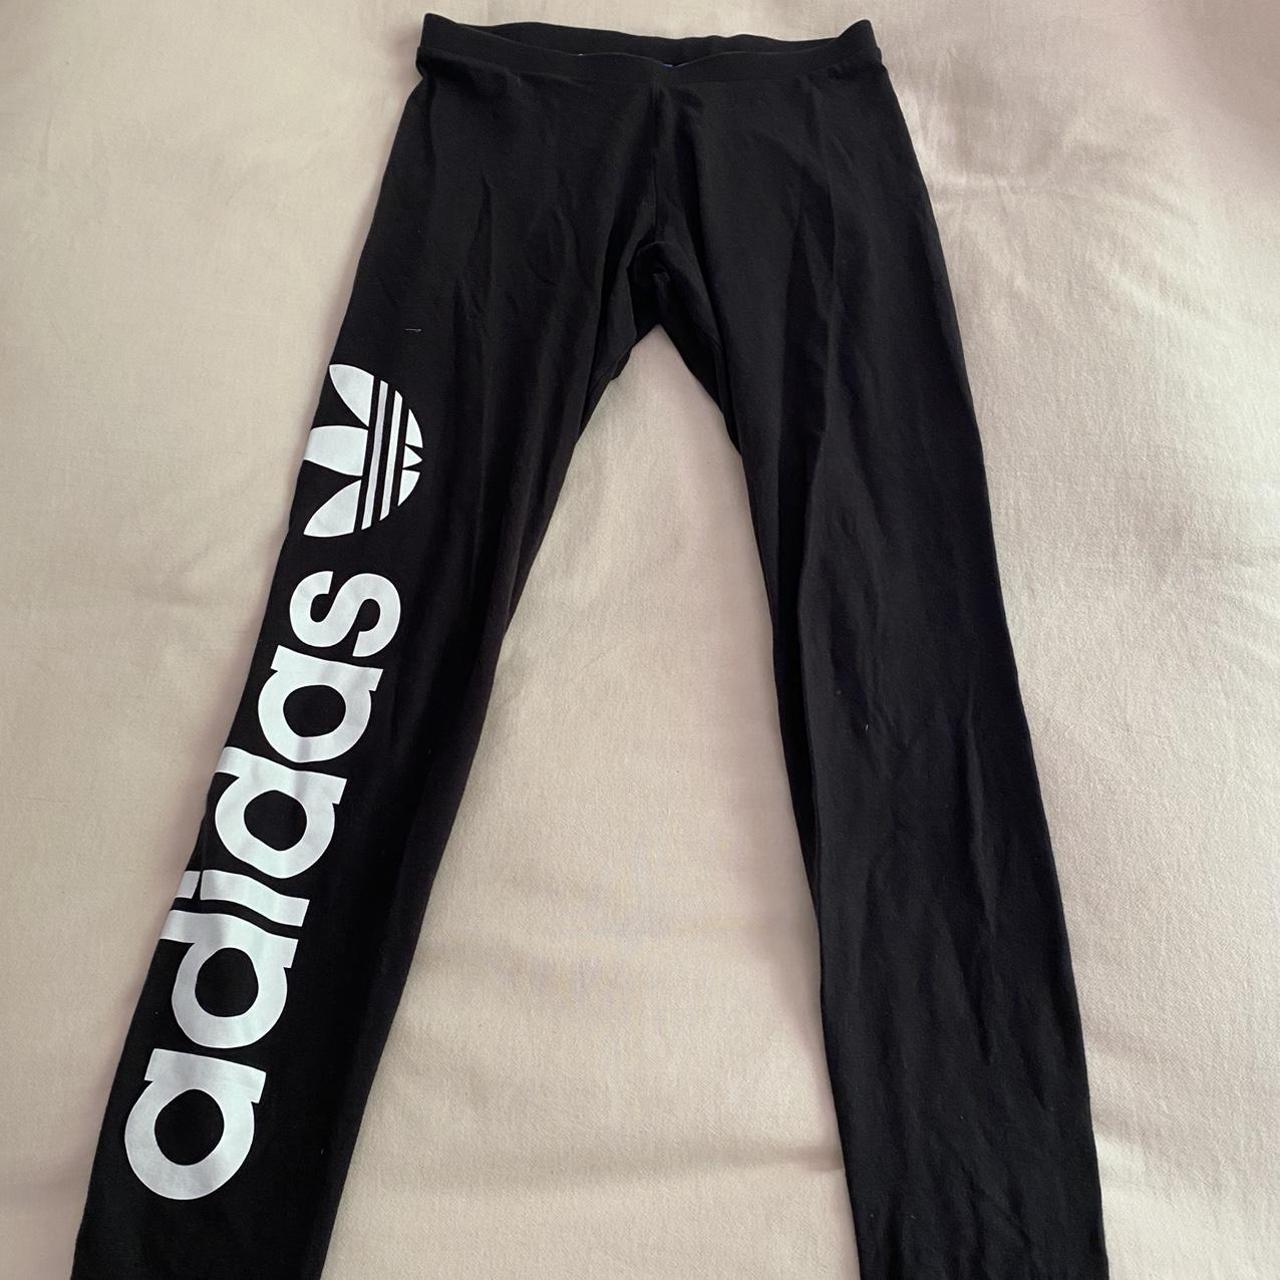 Adidas full length black leggings with white writing - Depop